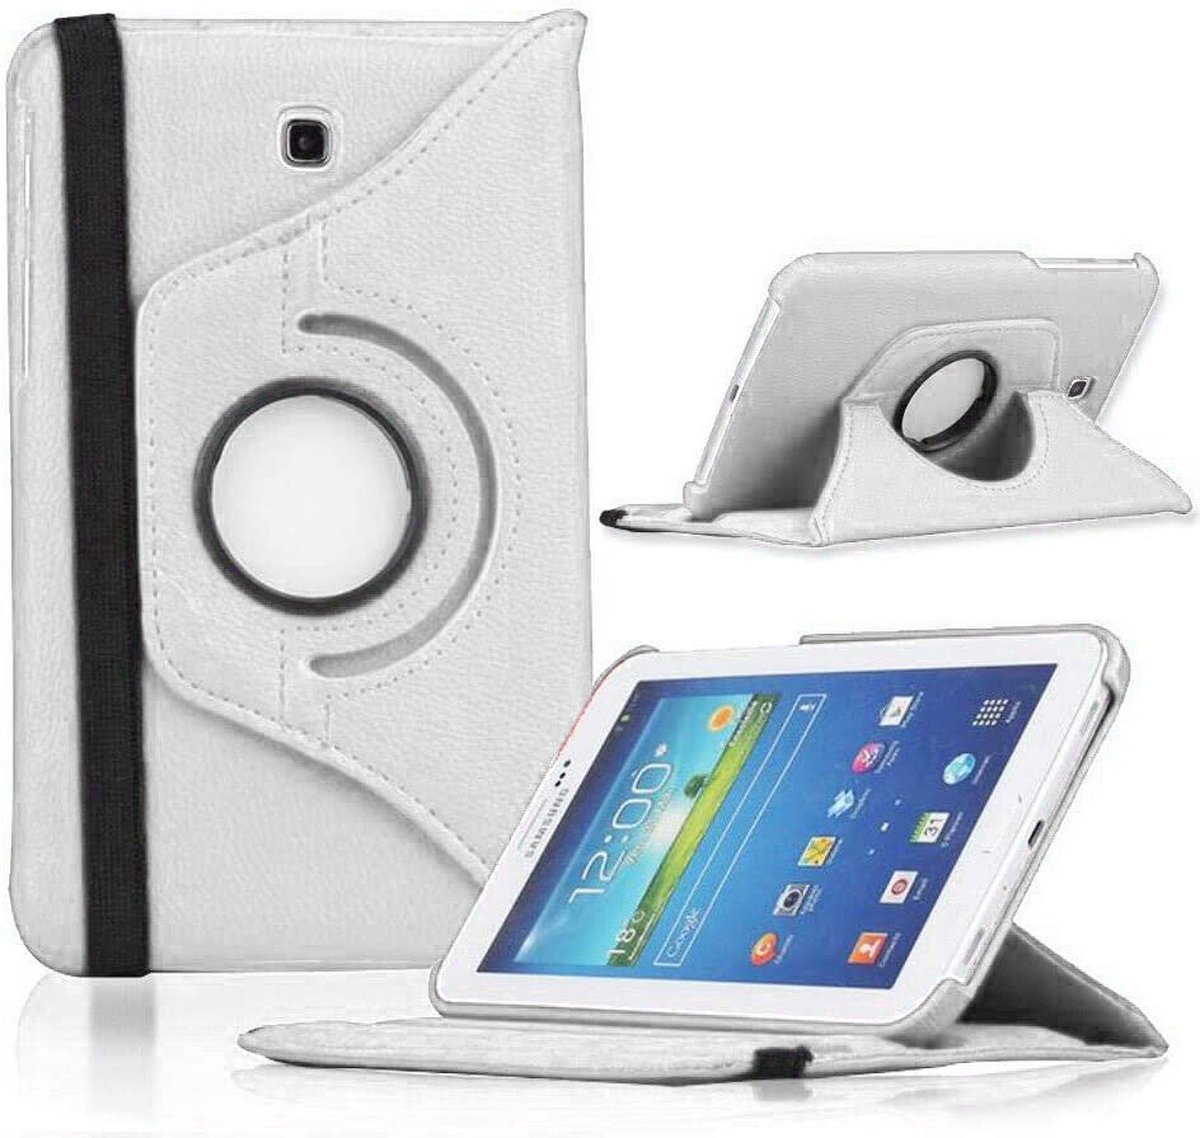 Draaibaar Hoesje - Rotation Tabletcase - Multi stand Case Geschikt voor: Samsung Galaxy Tab 3 7.0 inch 2013 (SM-T210/T215/P3200) - Wit